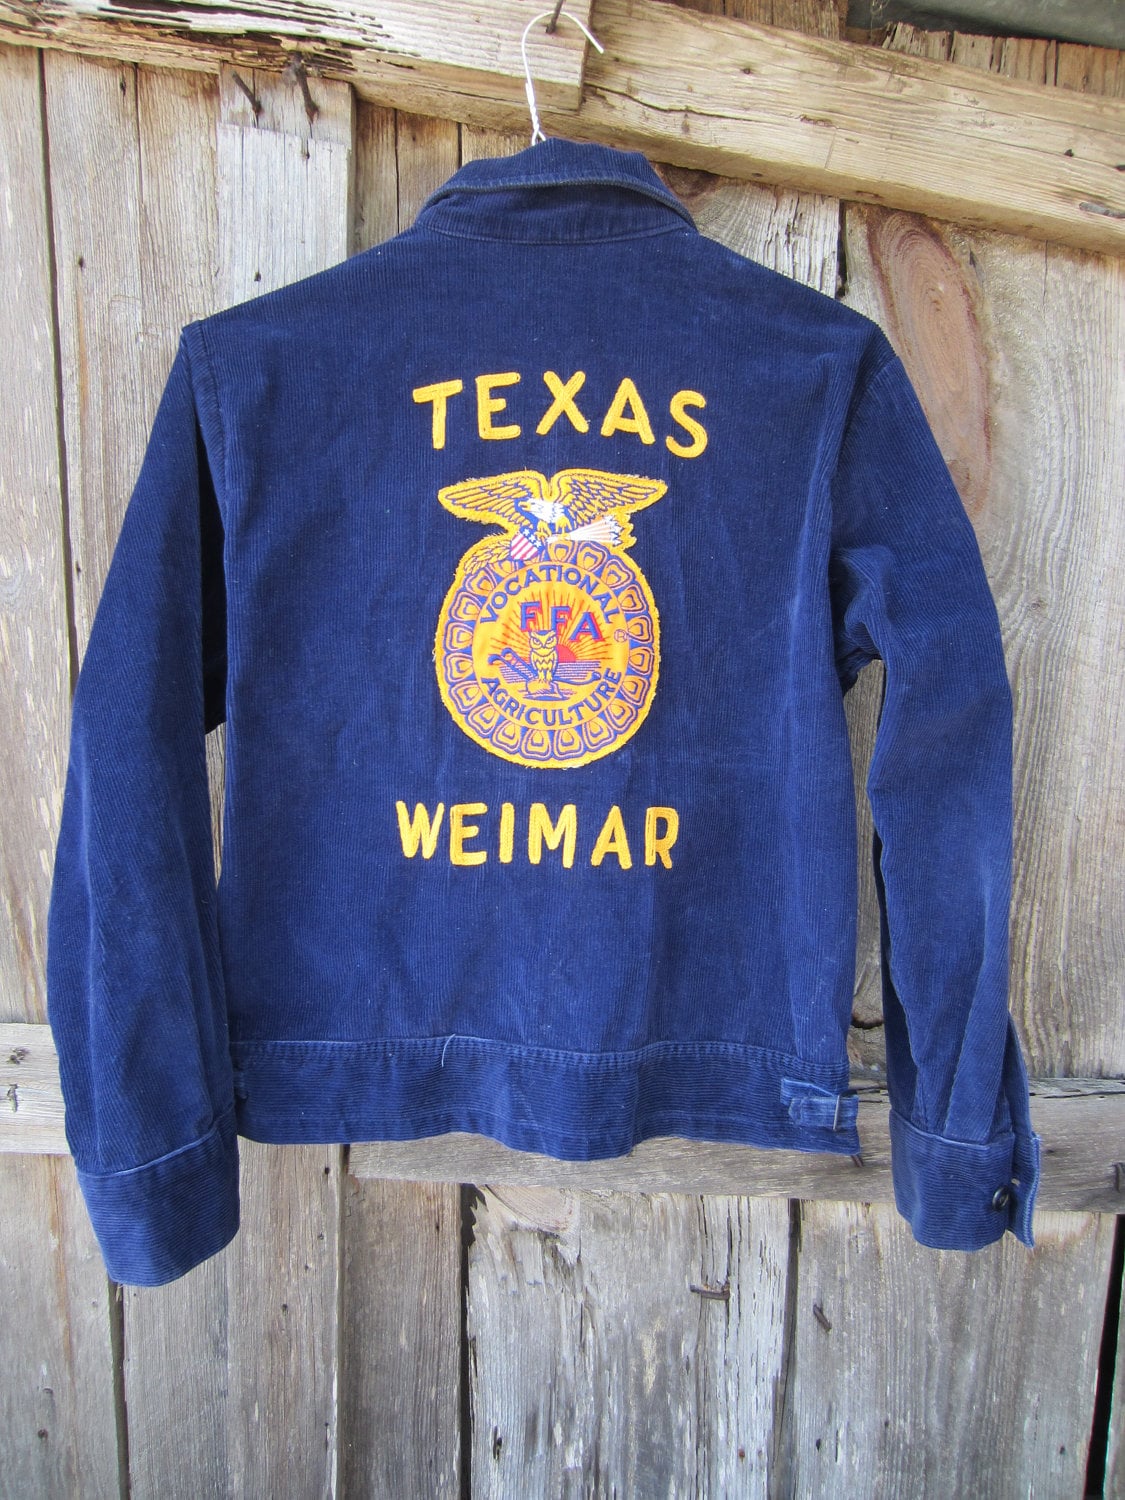 Vintage FFA Jacket in Blue Corduroy from Weimar Texas